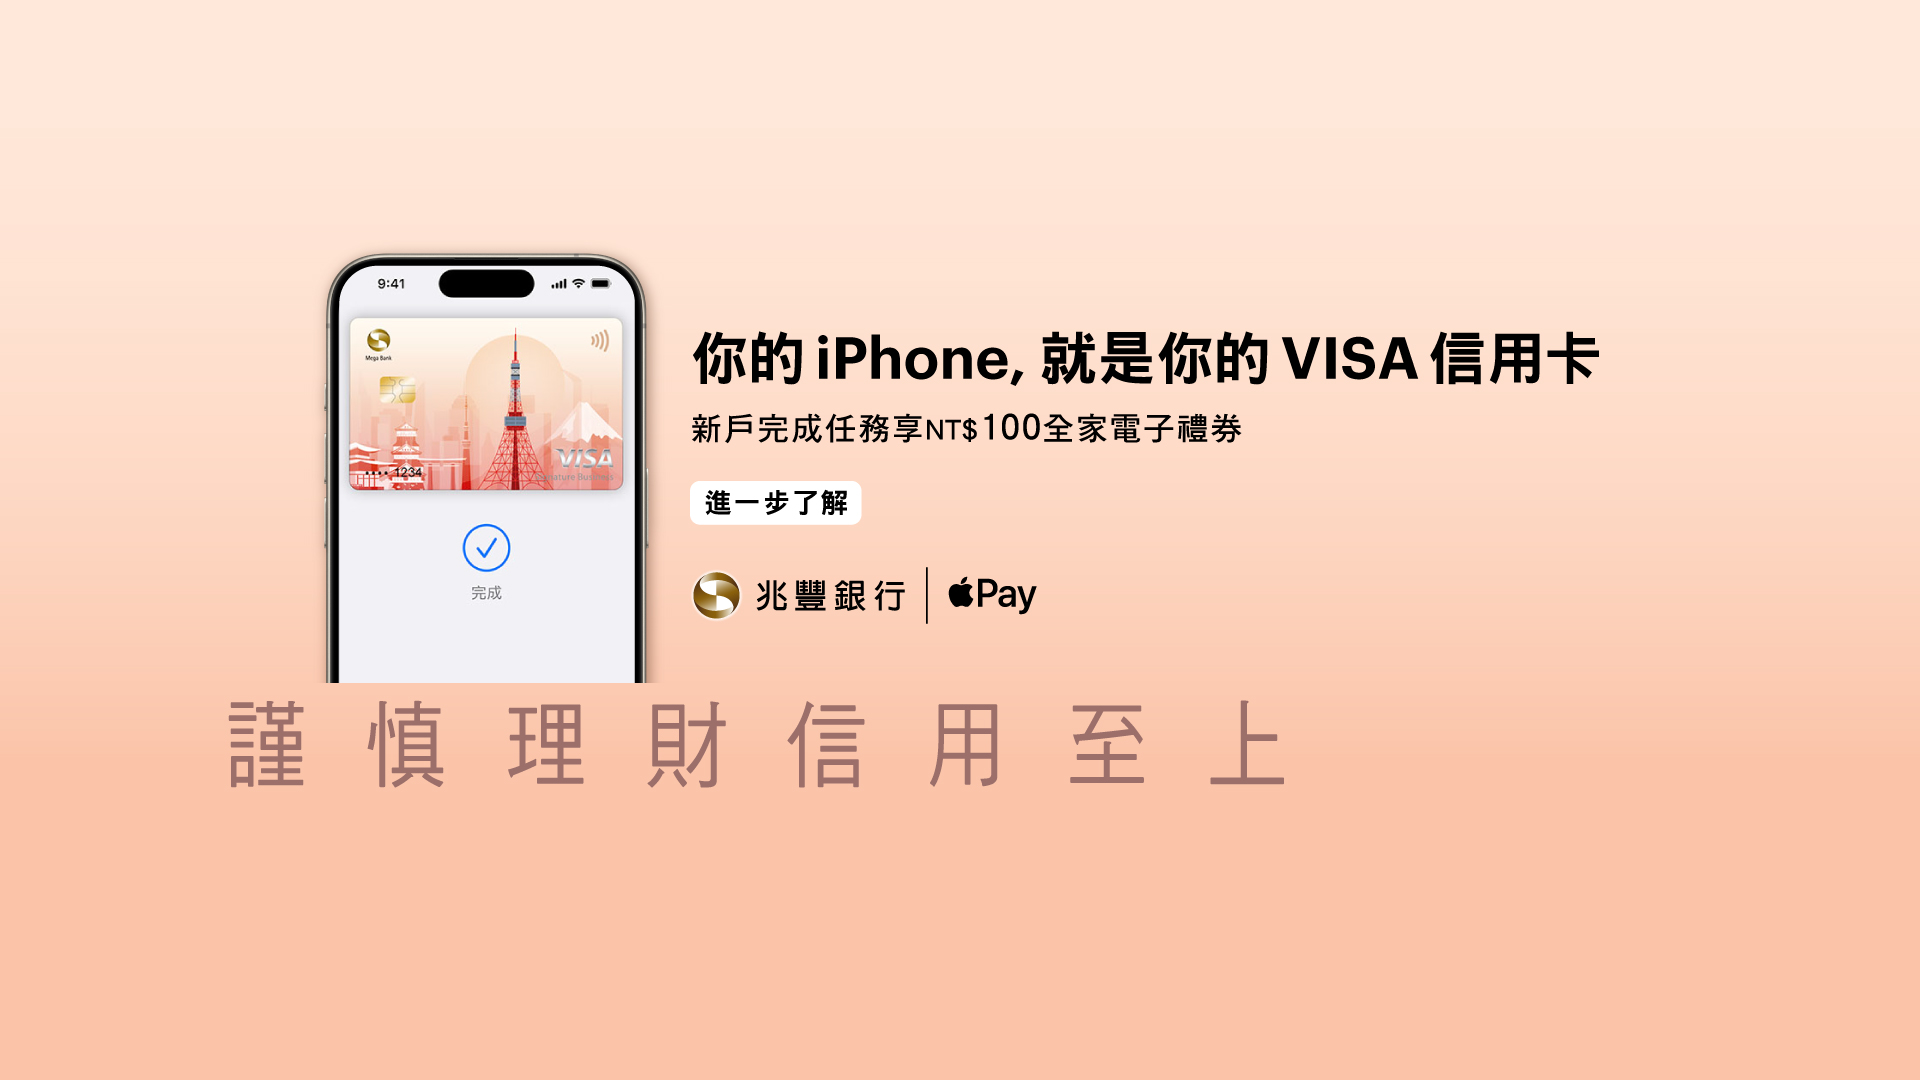 「你的iPhone, 就是你的VISA信用卡！」Banner